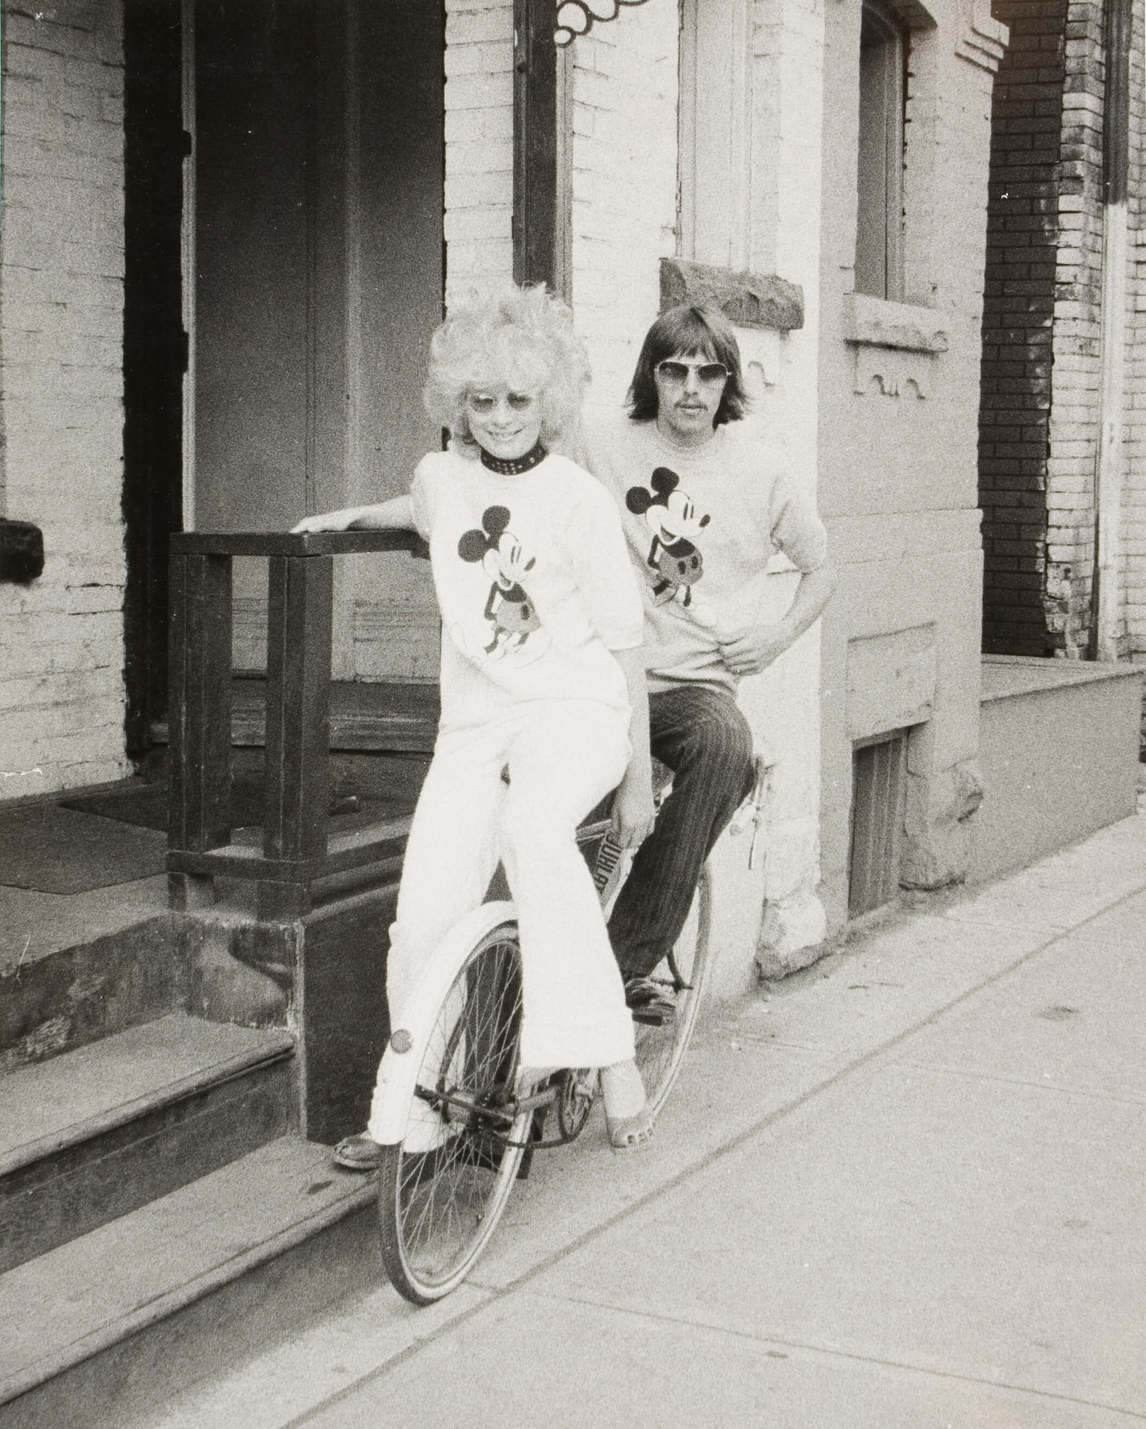 Art Canada Institute, Mimi Paige and Felix Partz at 78 Gerrard Street West, Toronto, c. 1969